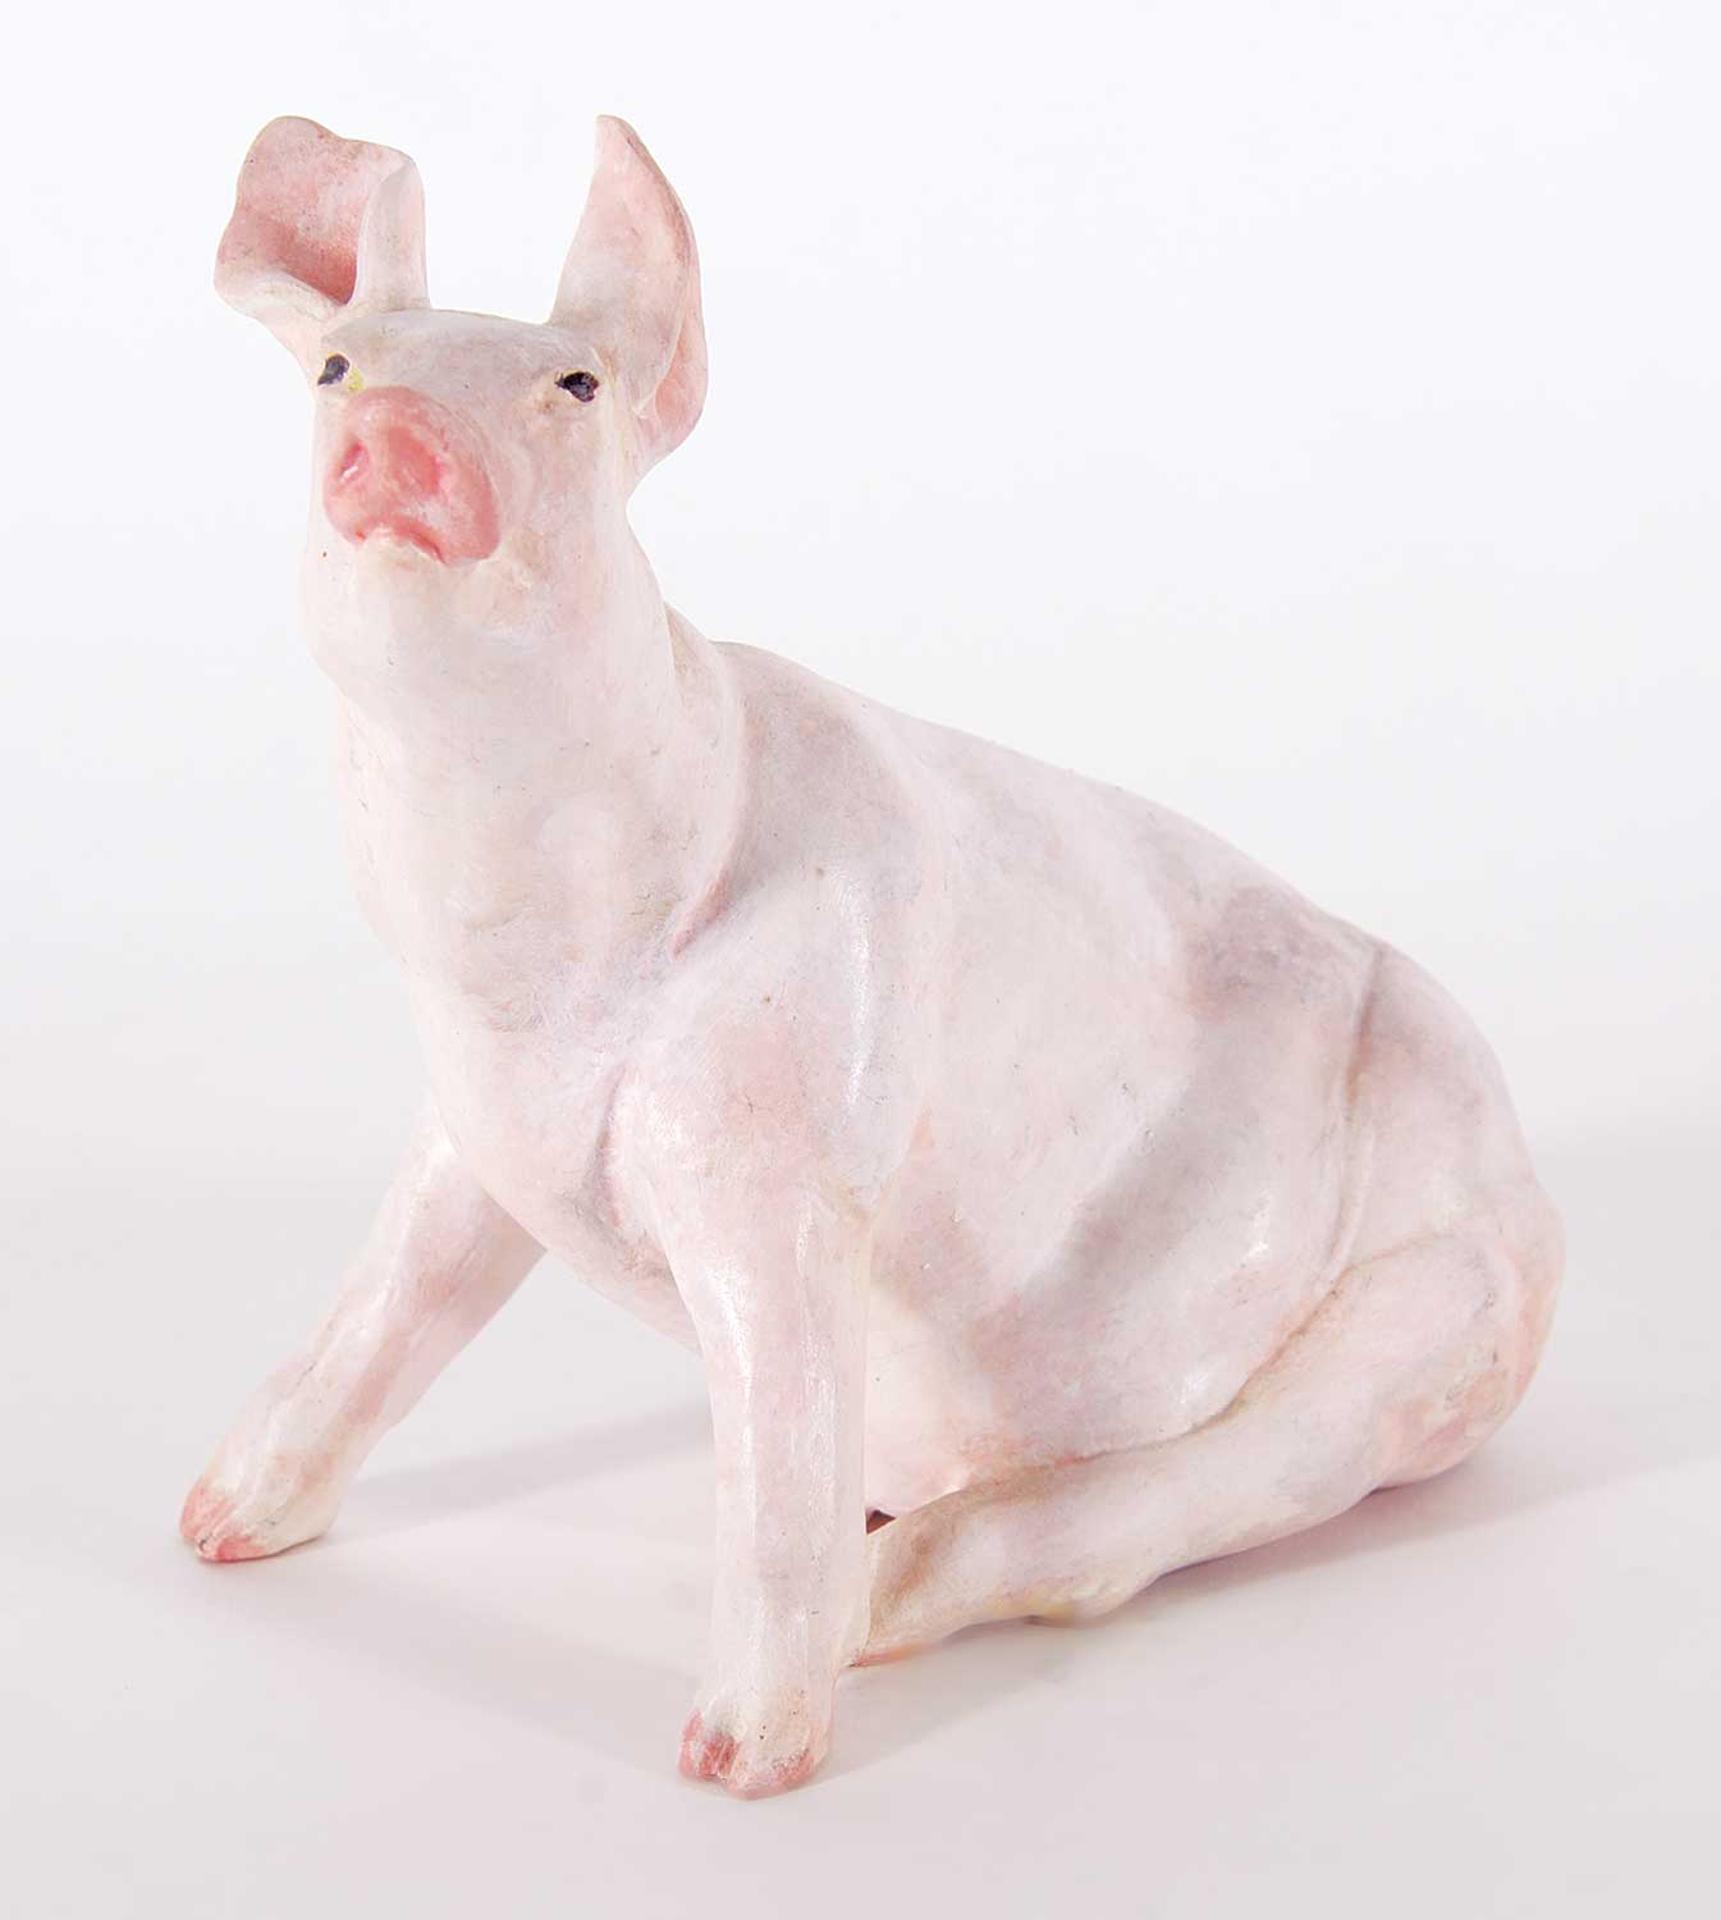 Gwen Hughes - Untitled - Pink Pig